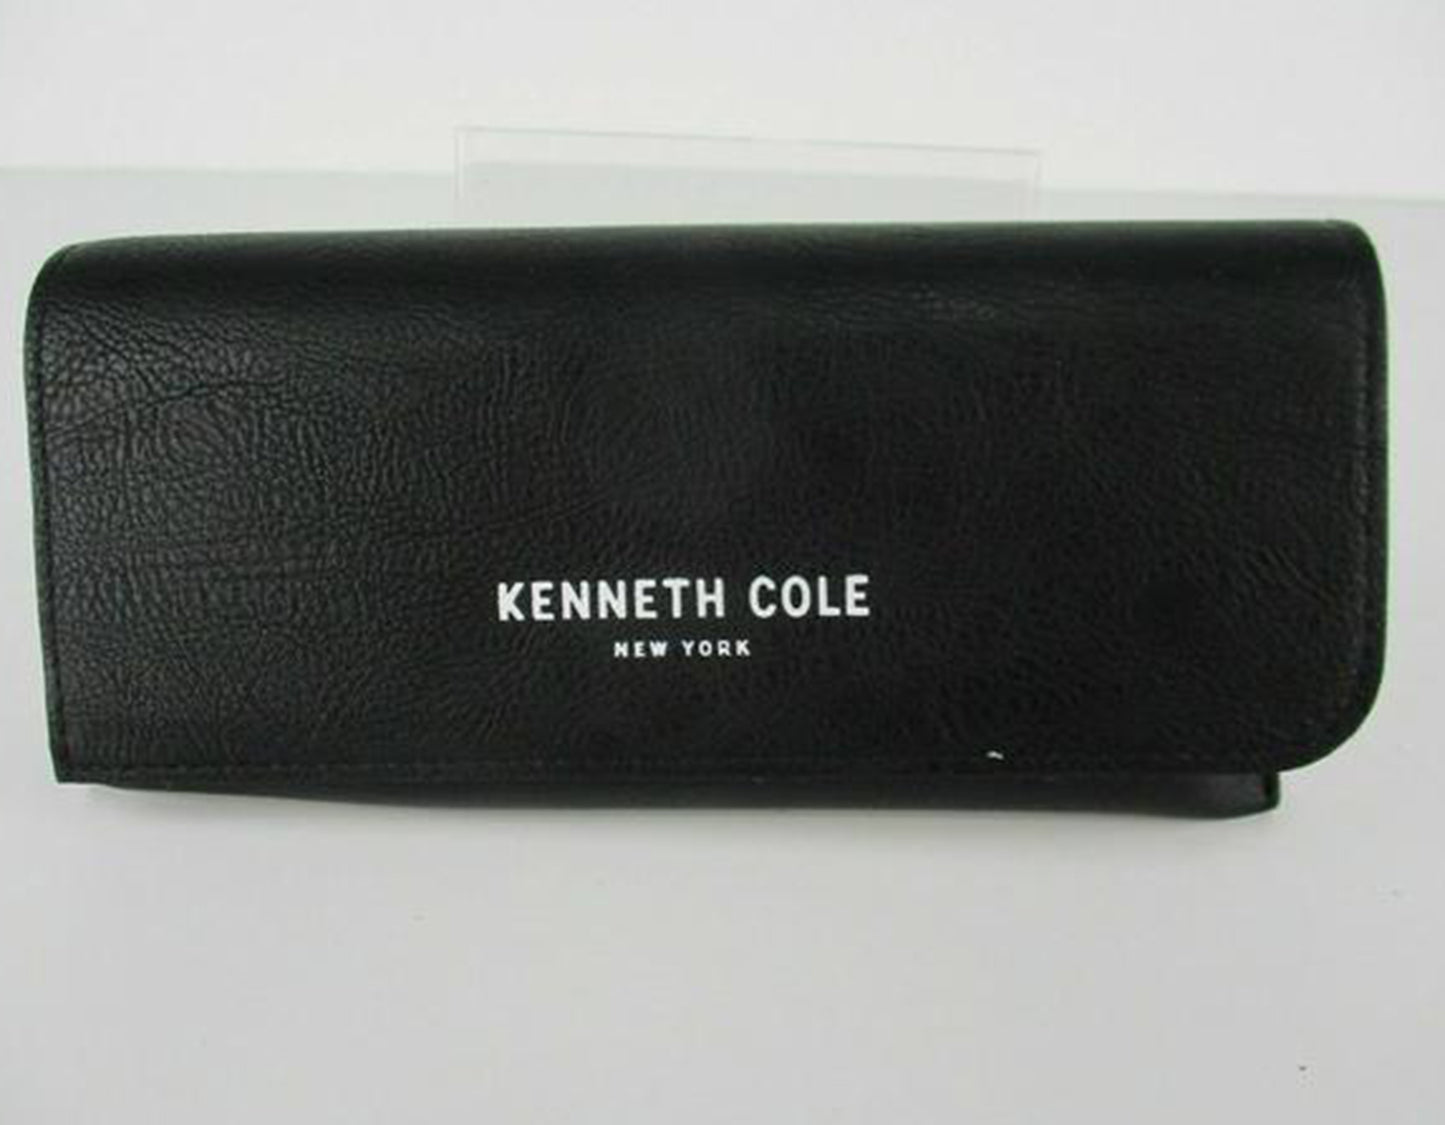 Kenneth Cole Reaction KC0896-001-55 55mm New Eyeglasses